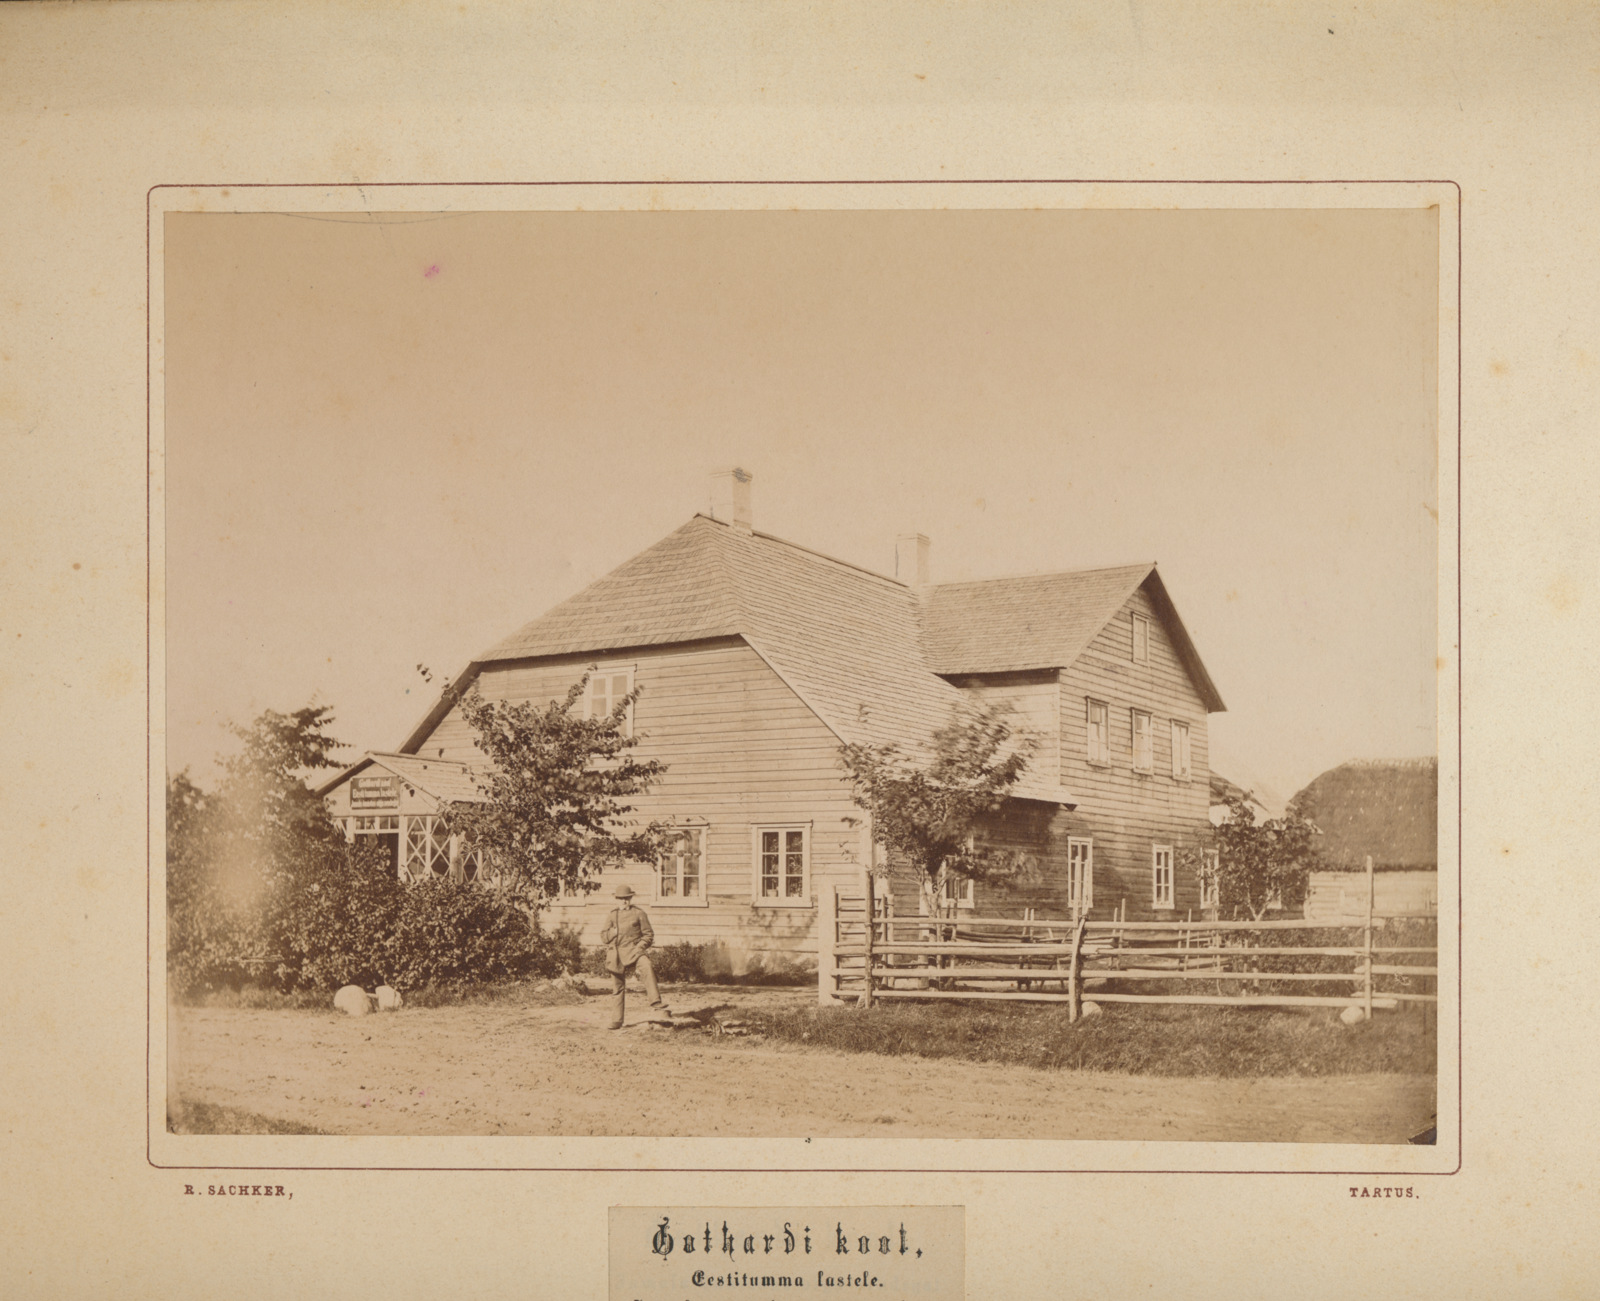 foto, Vändra, Gotthardi kool tummadele, u 1890, foto R. Sachker